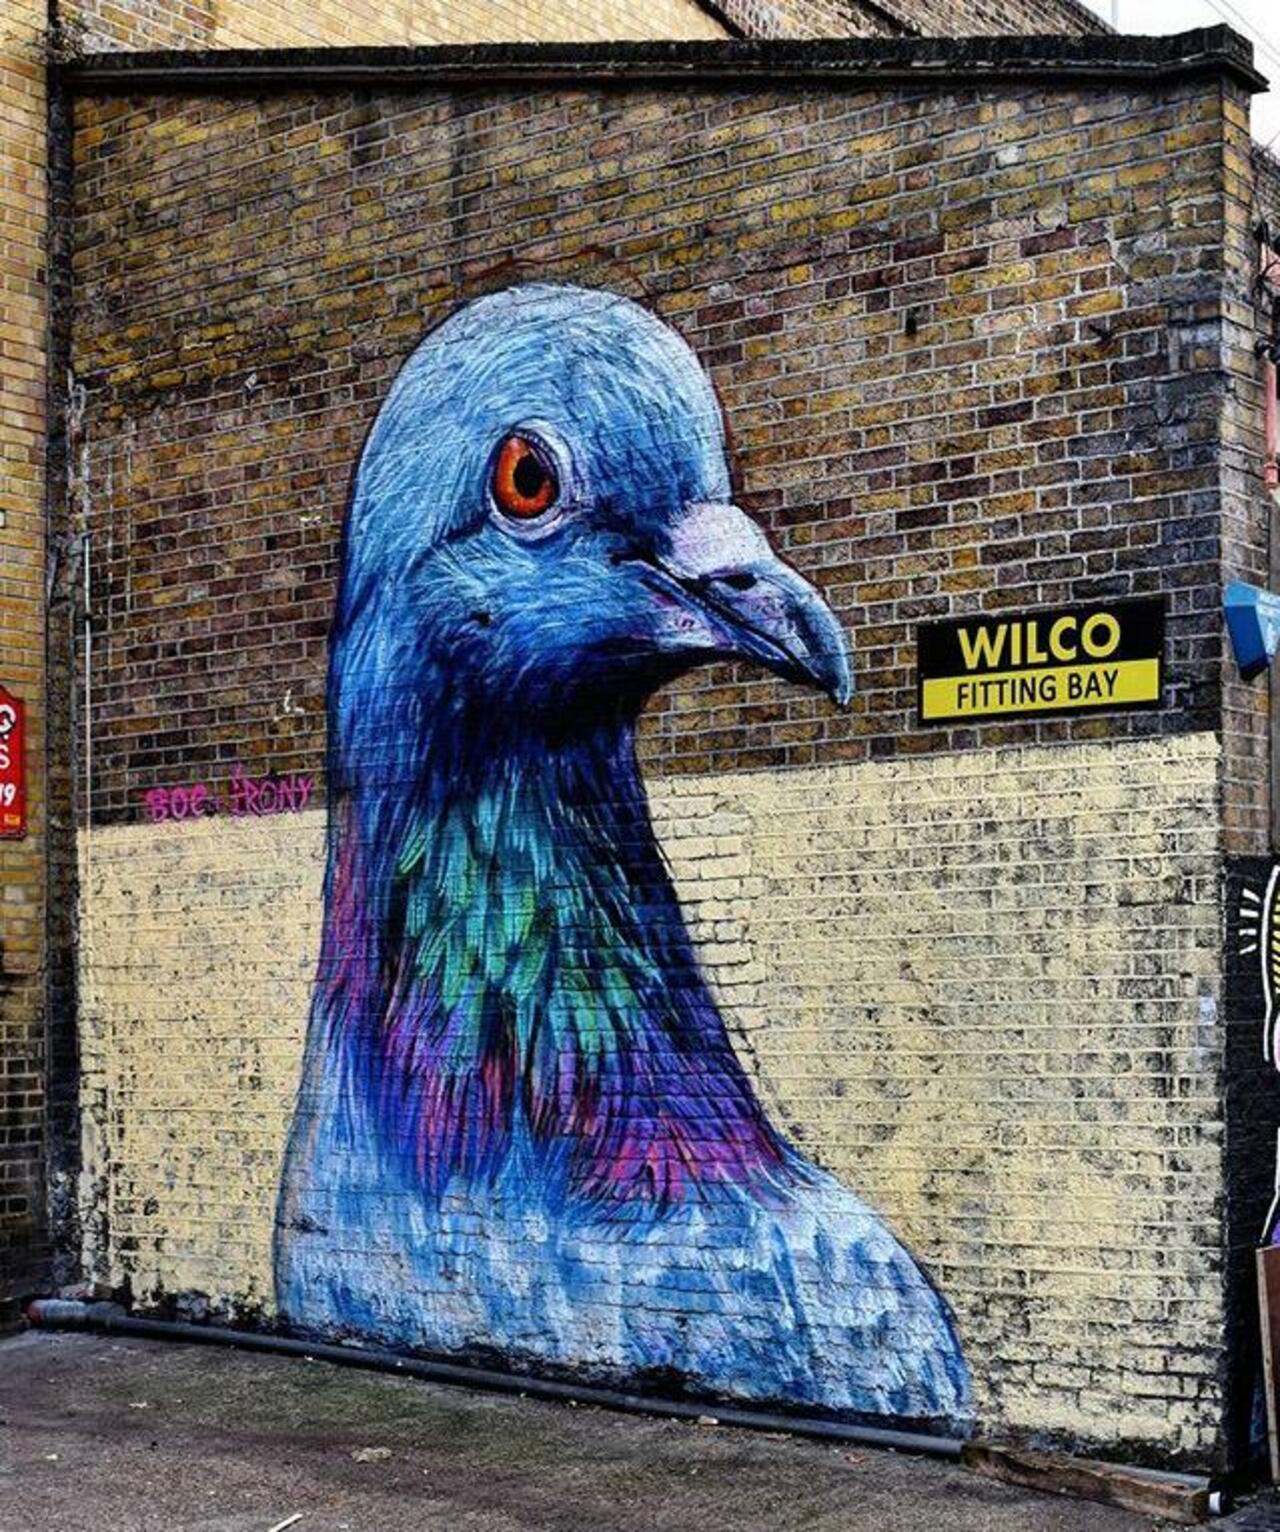 ＠kanta_1123 だいすきよー　Street Art by Placee Boe & whoamirony in London 

#art #graffiti #mural #streetart http://t.co/rzCP4p9gcQ